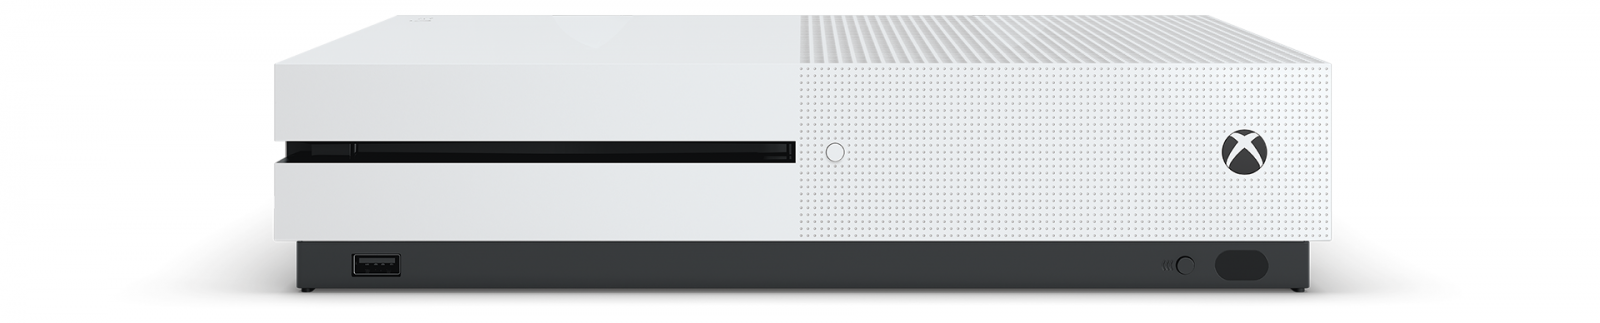 Xbox One S 1TB + FIFA 17 image1